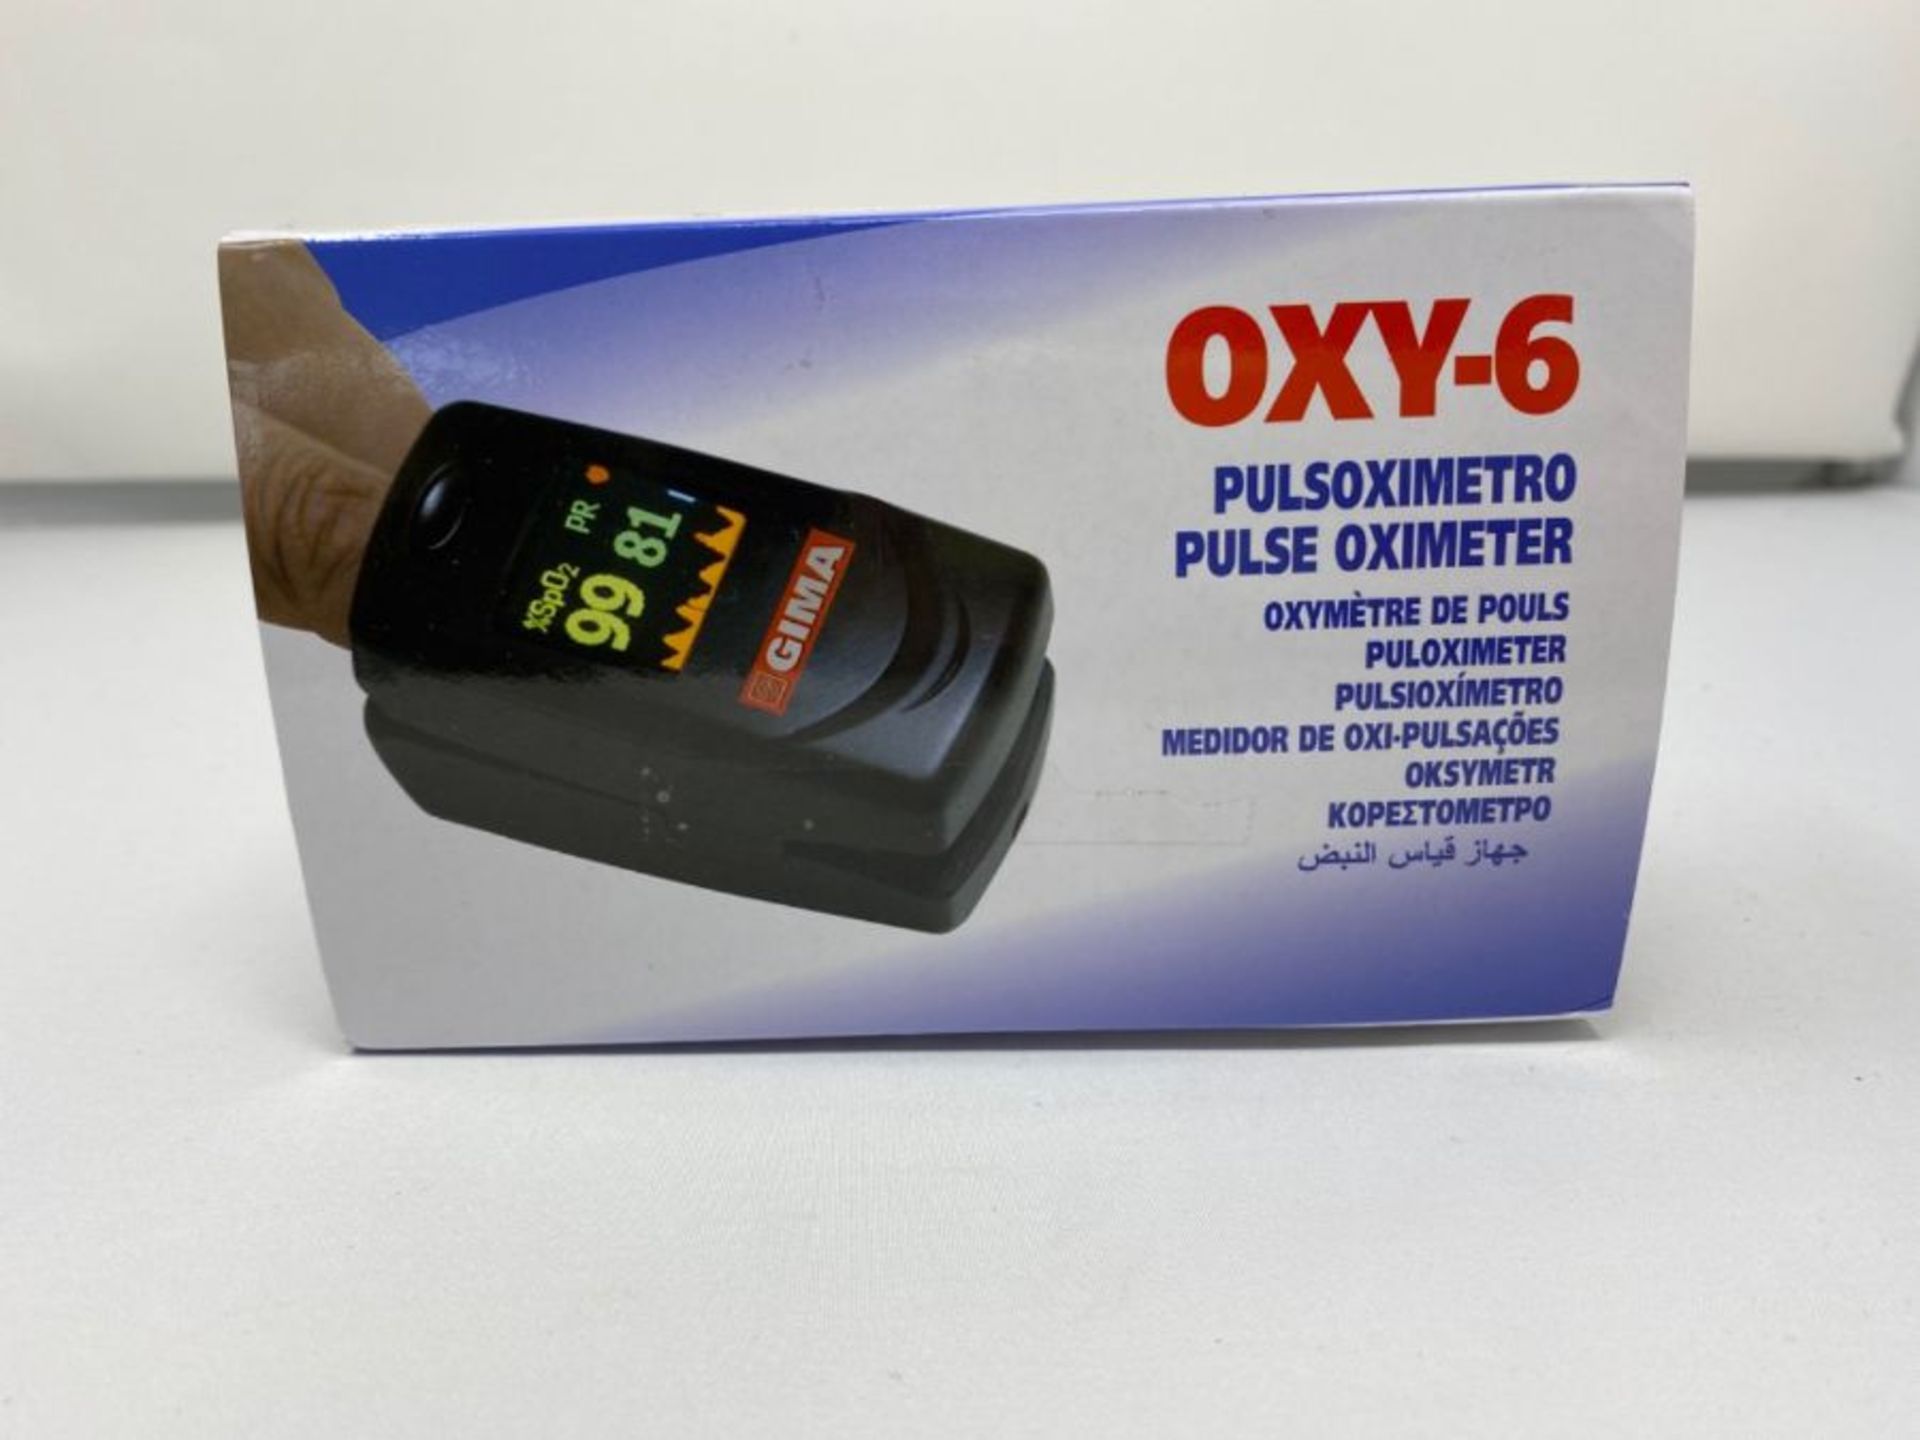 GIMA SATURIMETRO Oxy-6 Pulsoximetro da Dito, Diametro 10-22 mm, Portatile, Rileva Satu - Image 2 of 3